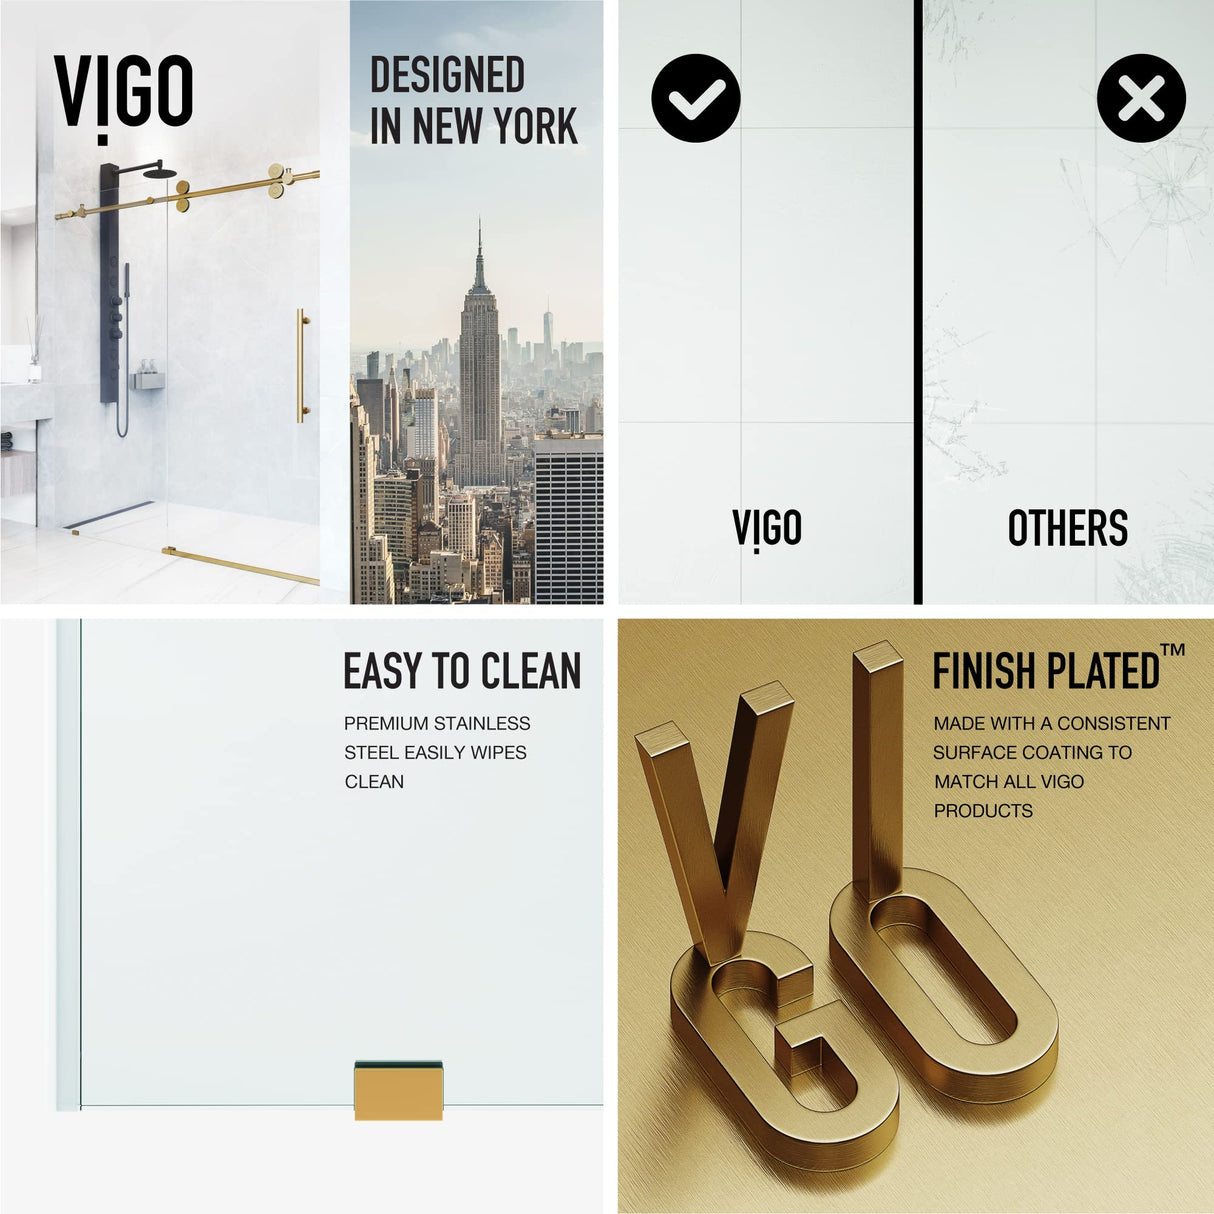 VIGO Adjustable 60-64" W x 74" H Elan Frameless Sliding Shower Door with Clear Tempered Glass, Reversible Handle in Matte Brushed Gold